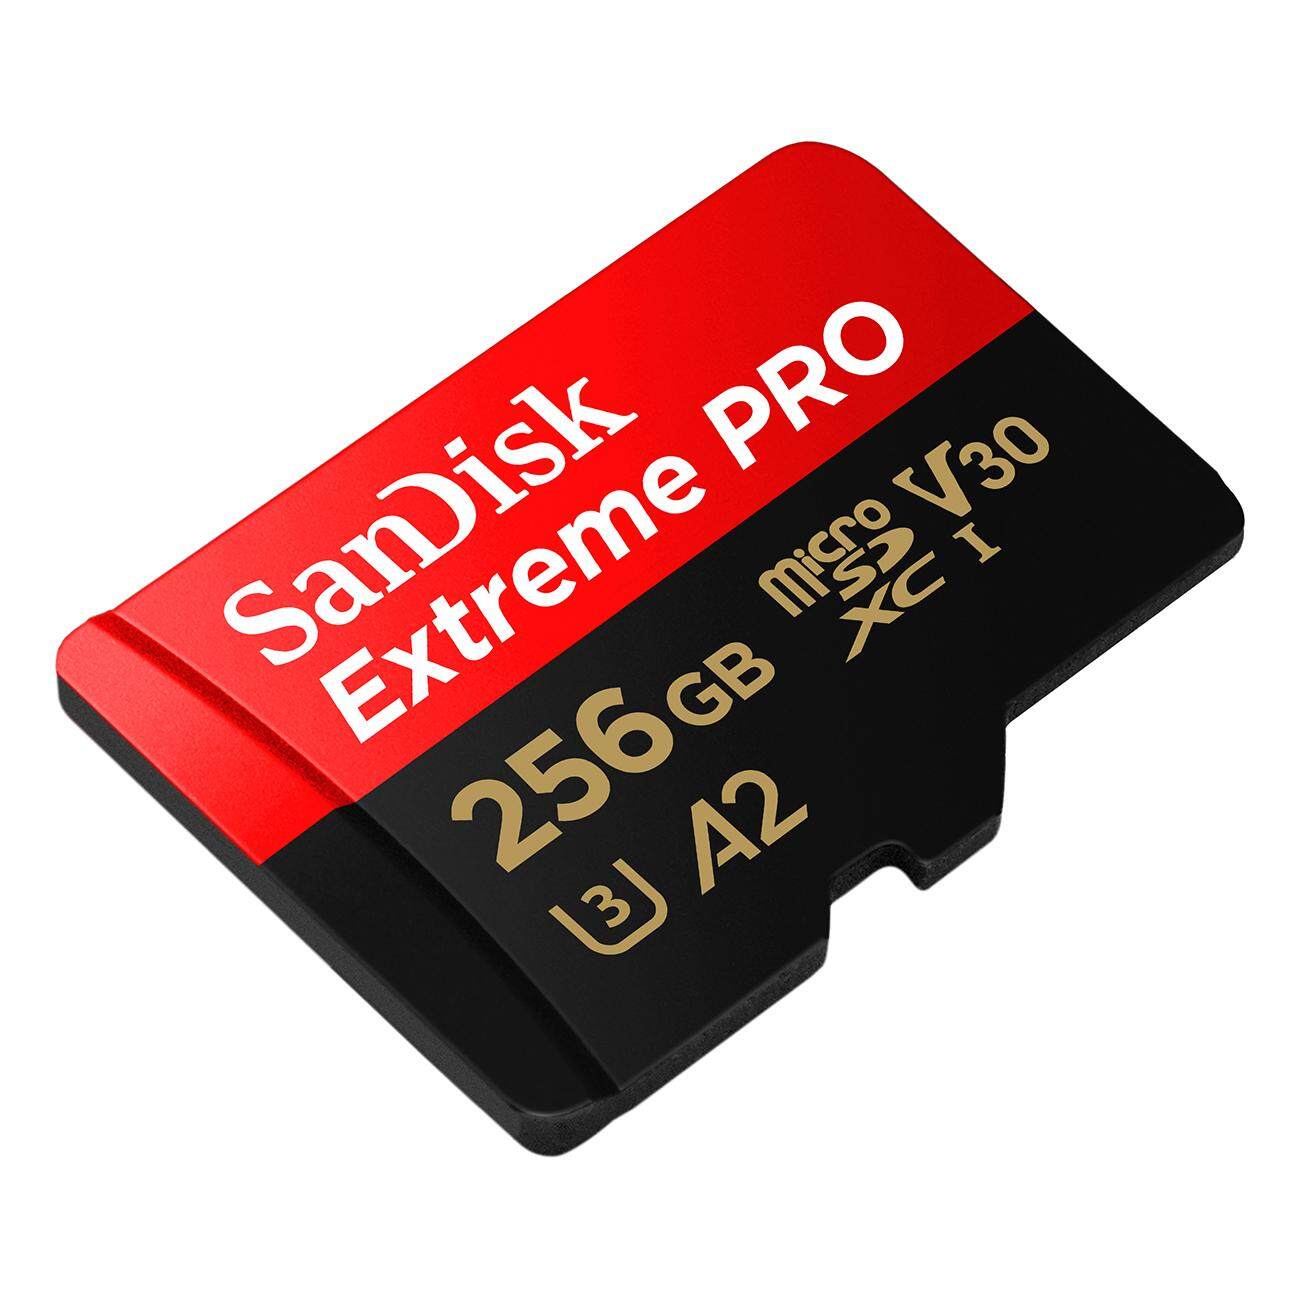 SanDisk Extreme Pro microSDXC, SQXCZ 256GB, V30, U3, C10, A2, UHS-I, 170MB/s R, 90MB/s W, 4x6, SD adaptor, Lifetime Limited ( เมมโมรี่การ์ด ไมโครเอสดี การ์ด )